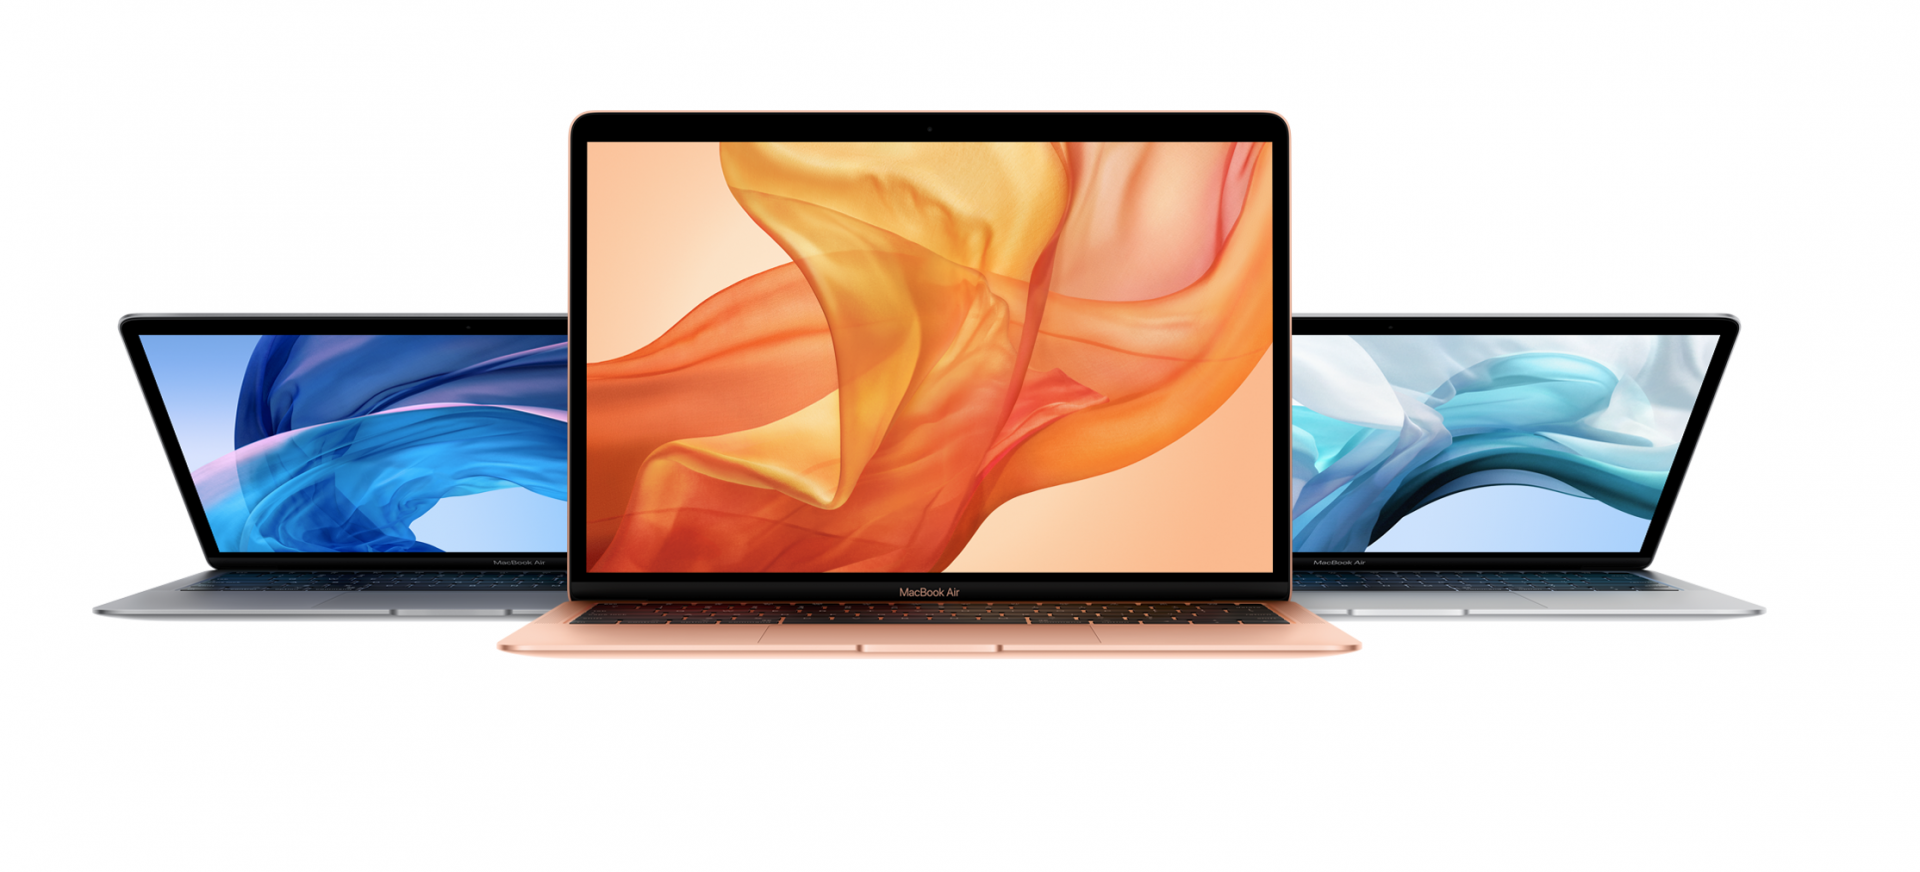 Slankere og skarpere MacBook Air